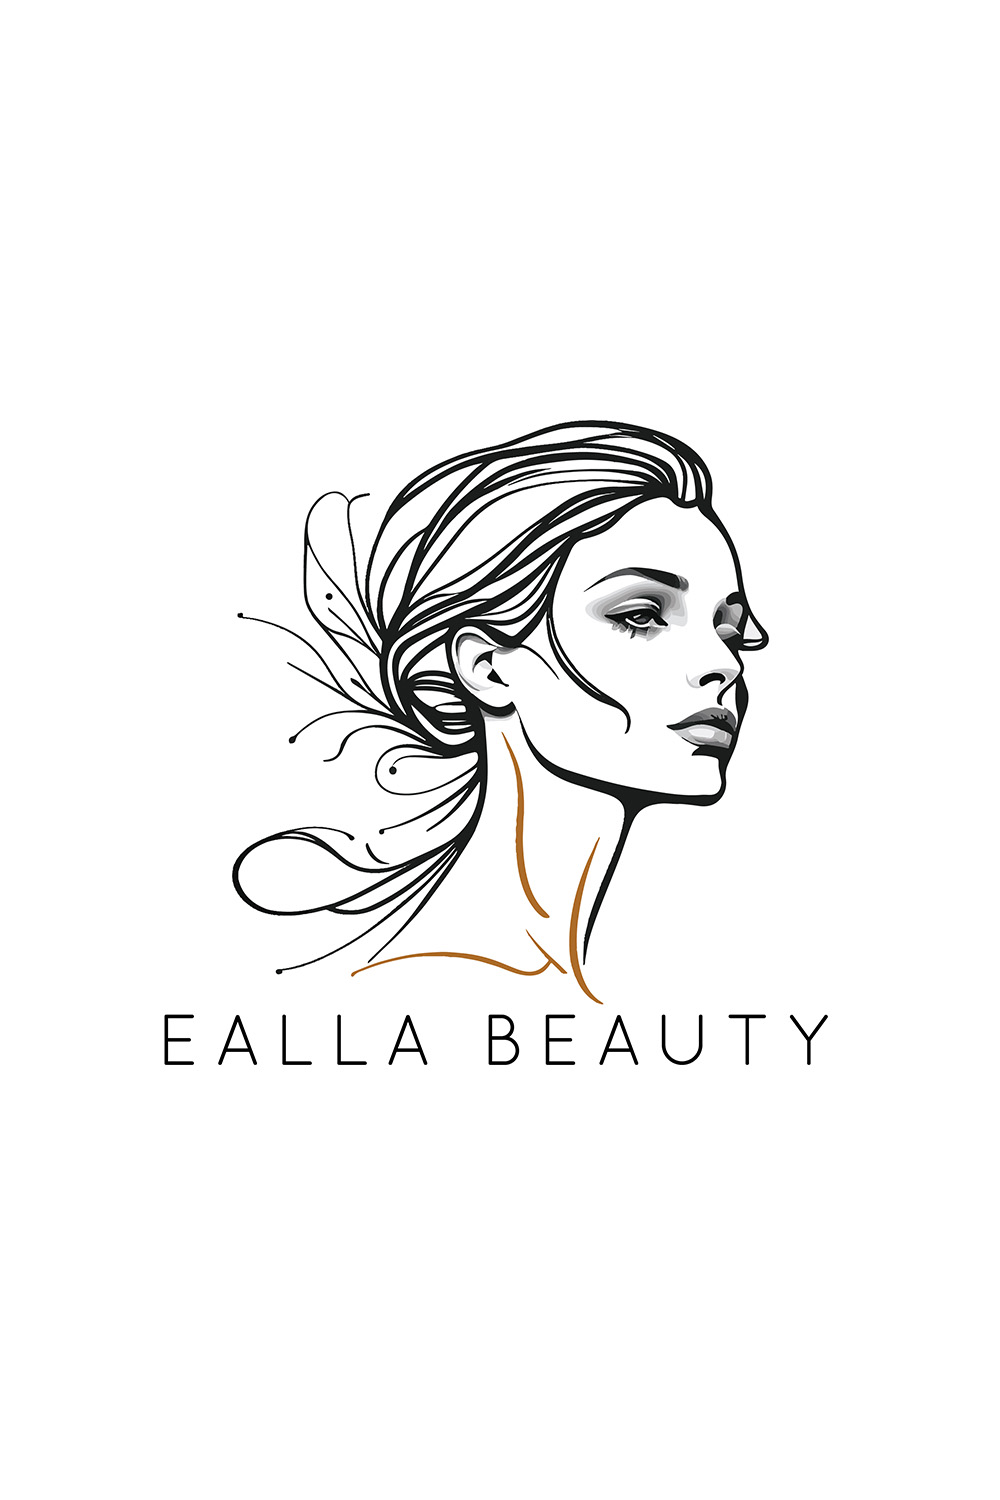 Beauty logo - Girl face beauty logo - illustration artwork design - makeup beauty logo pinterest preview image.